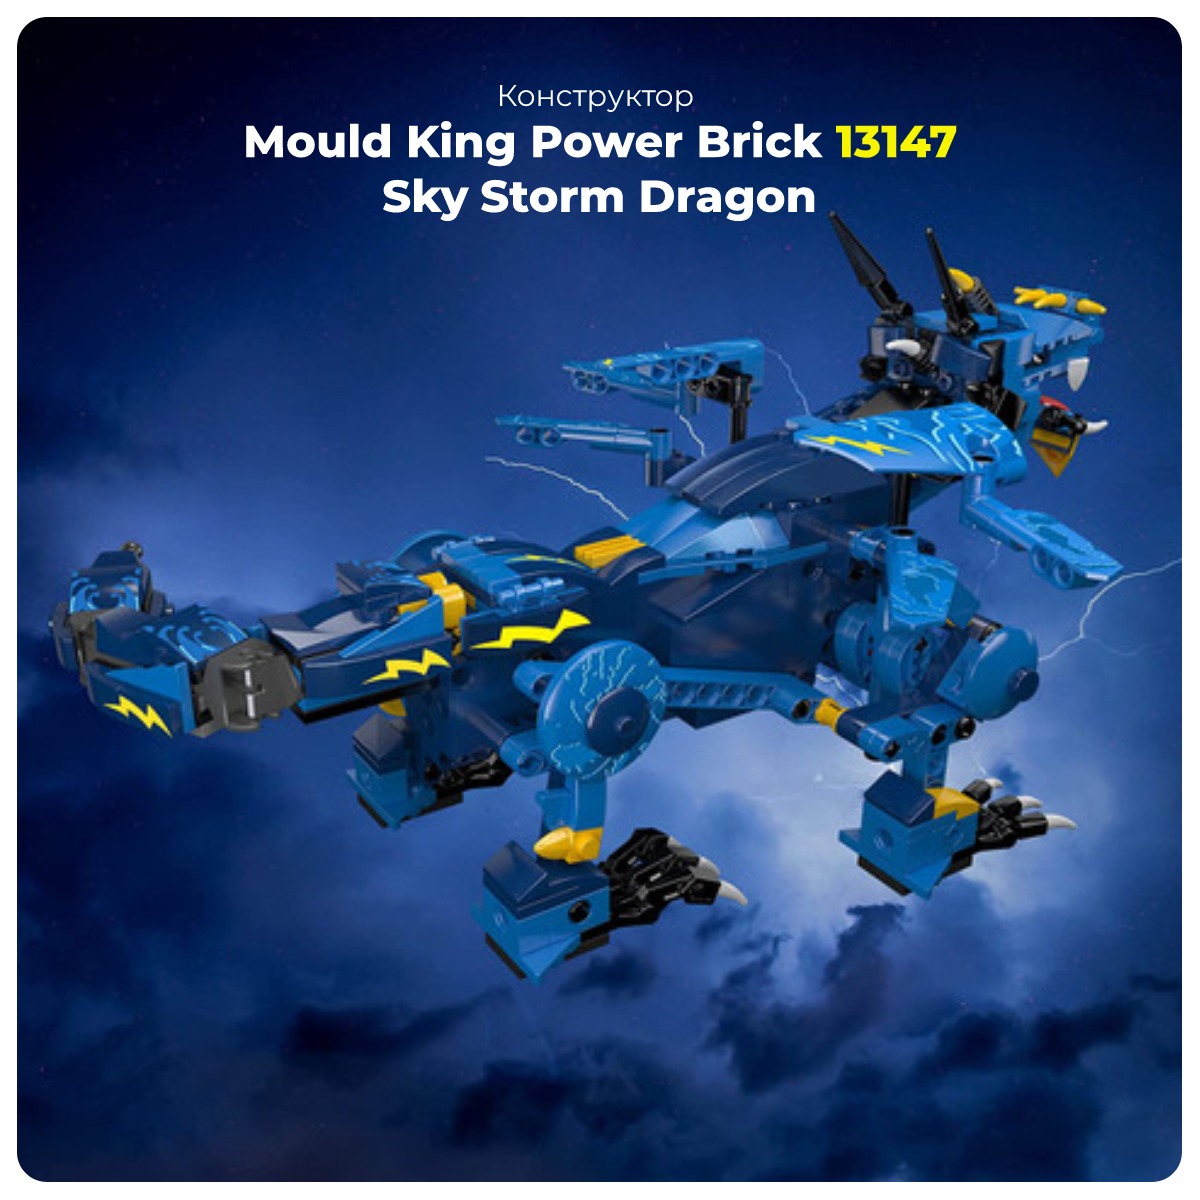 Mould-King-Power-Brick-13147-Sky-Storm-Dragon-01